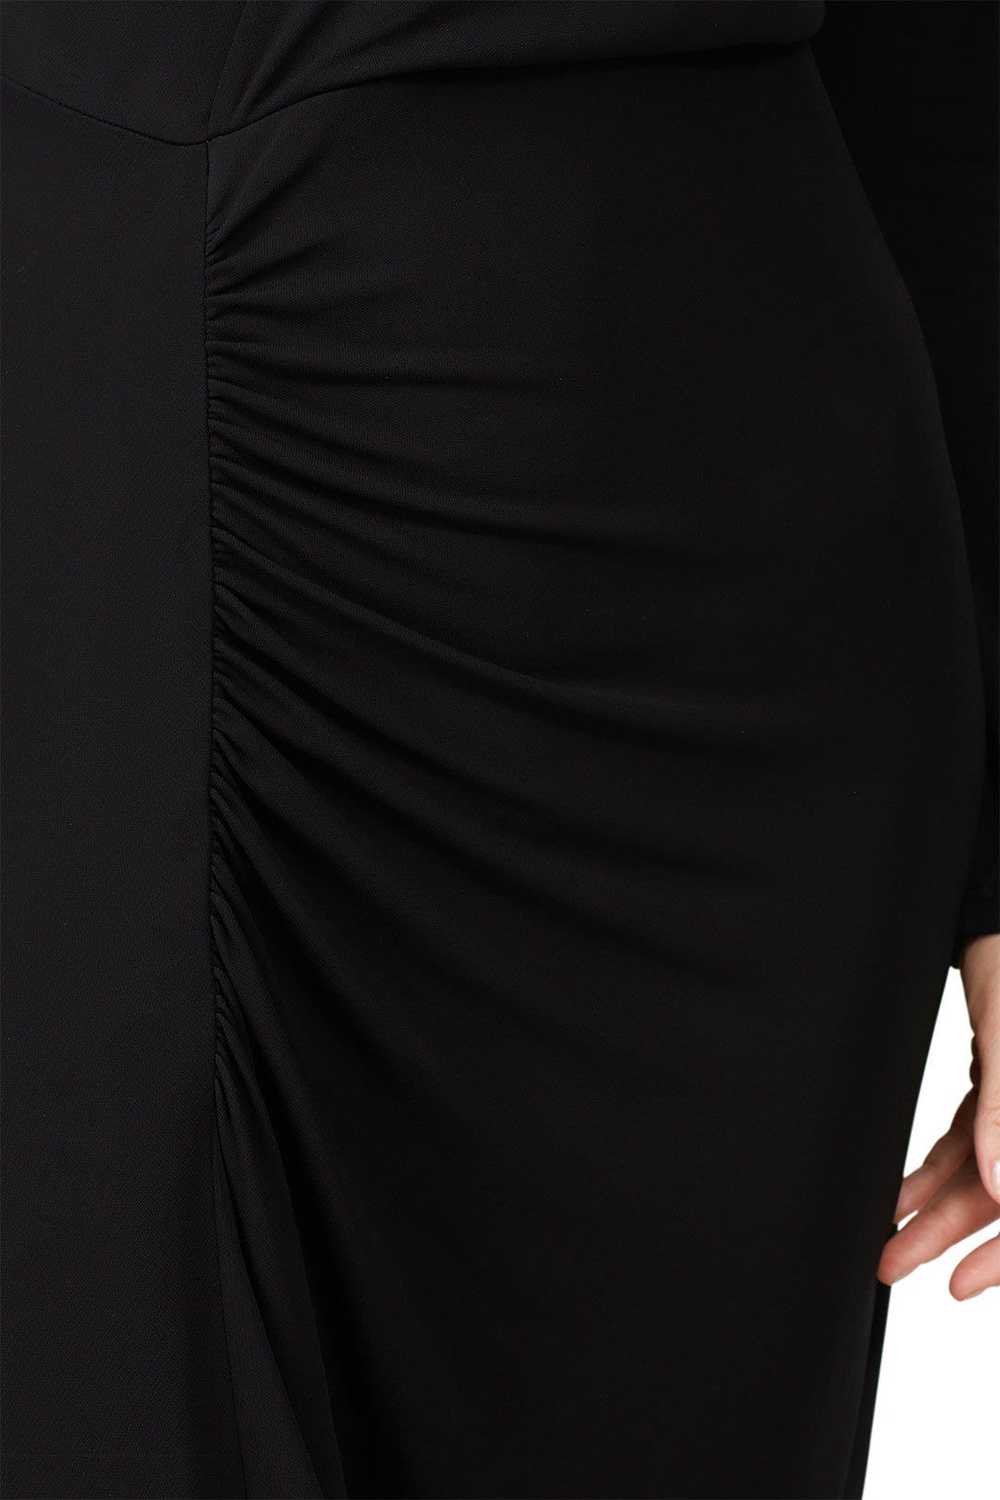 Atlein Black Long Sleeve Ruched Dress - image 4